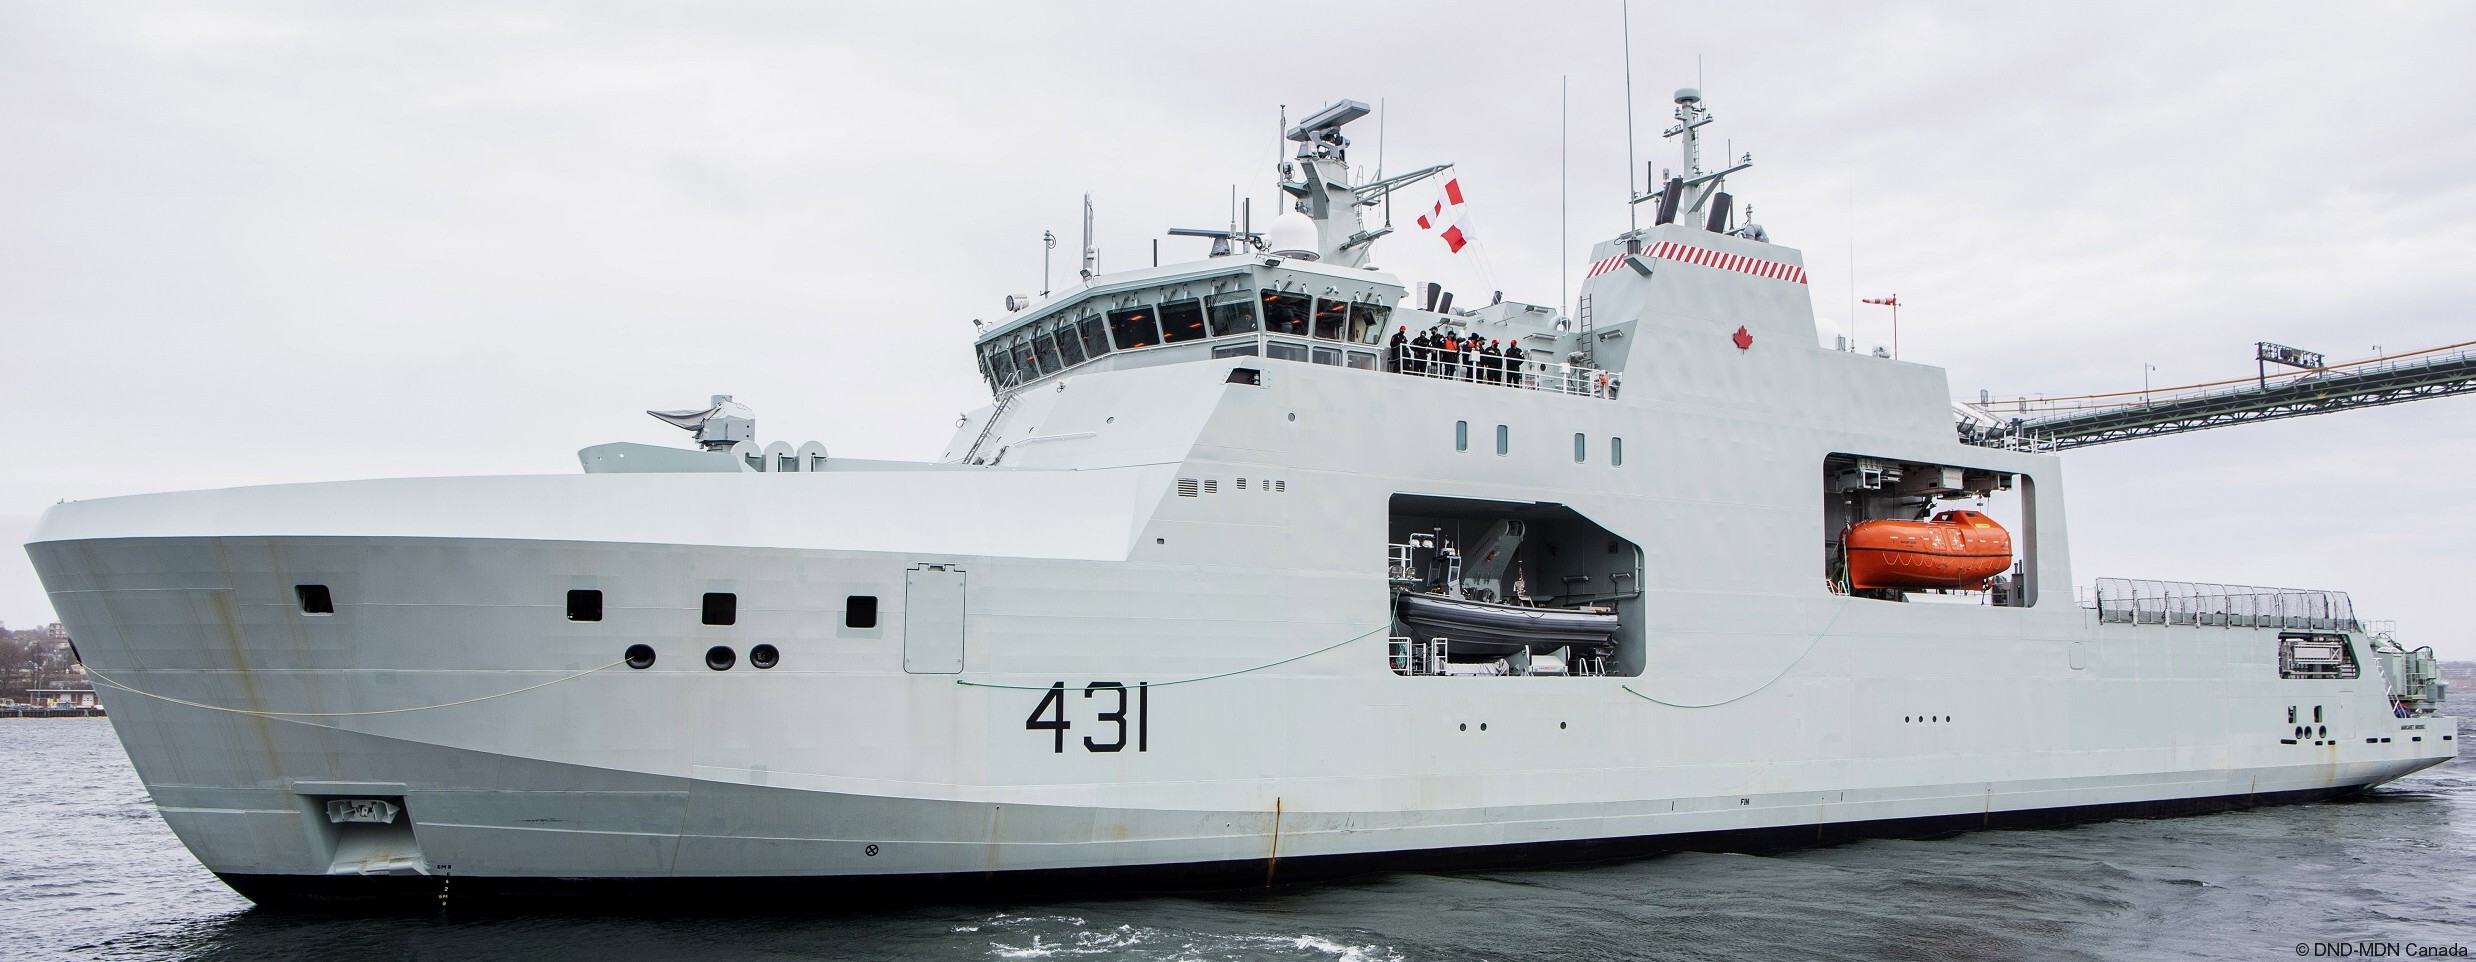 aopv-431 hmcs margaret brooke harry dewolf class arctic offshore patrol vessel ncsm royal canadian navy 09